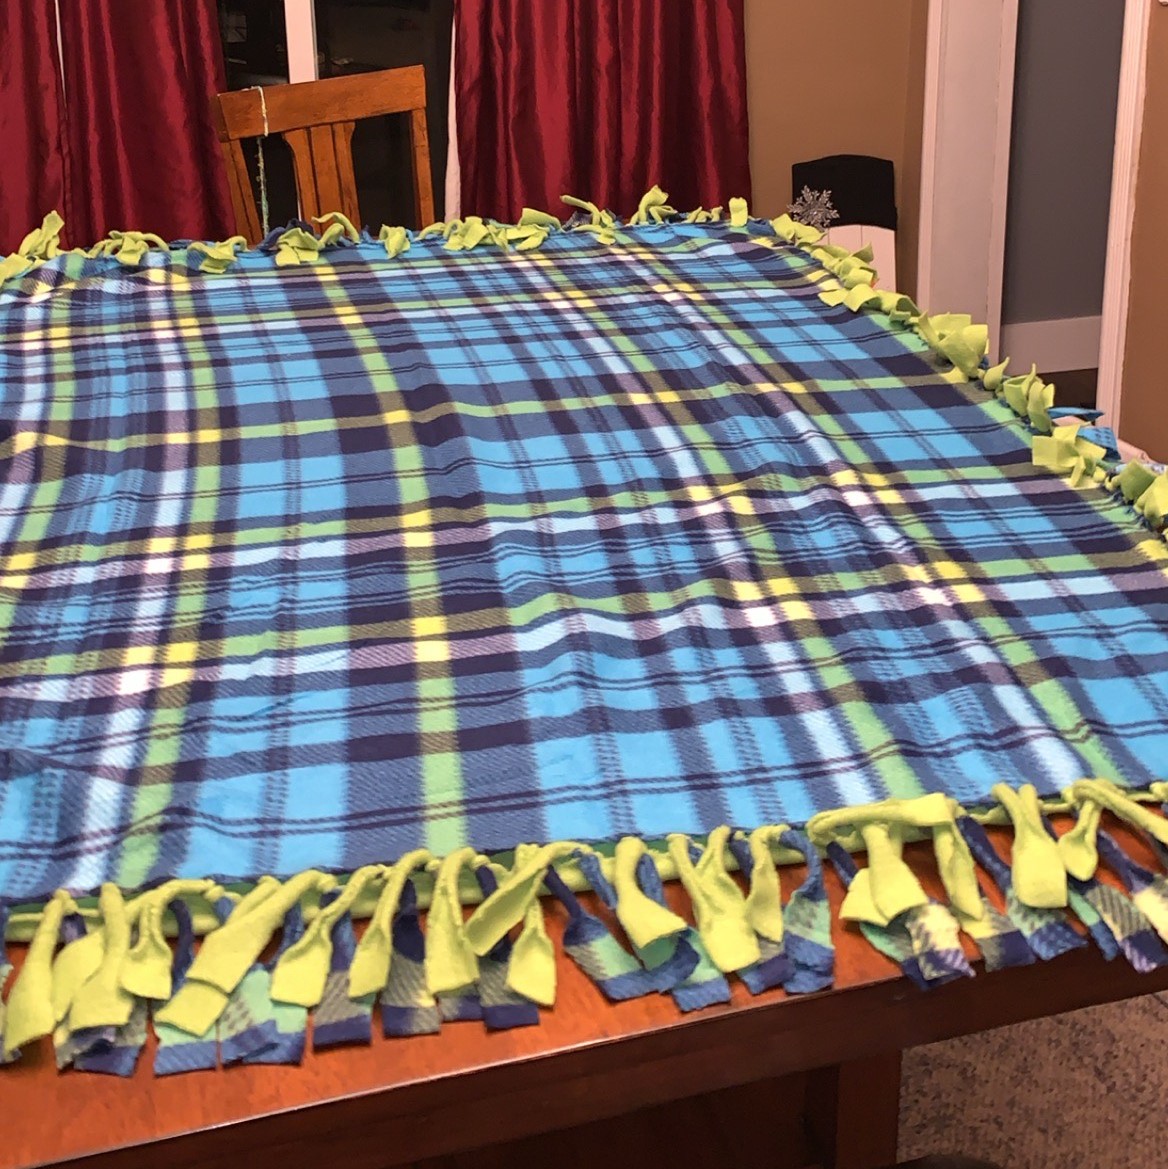 Students making blankets for Aledo nursing home residents